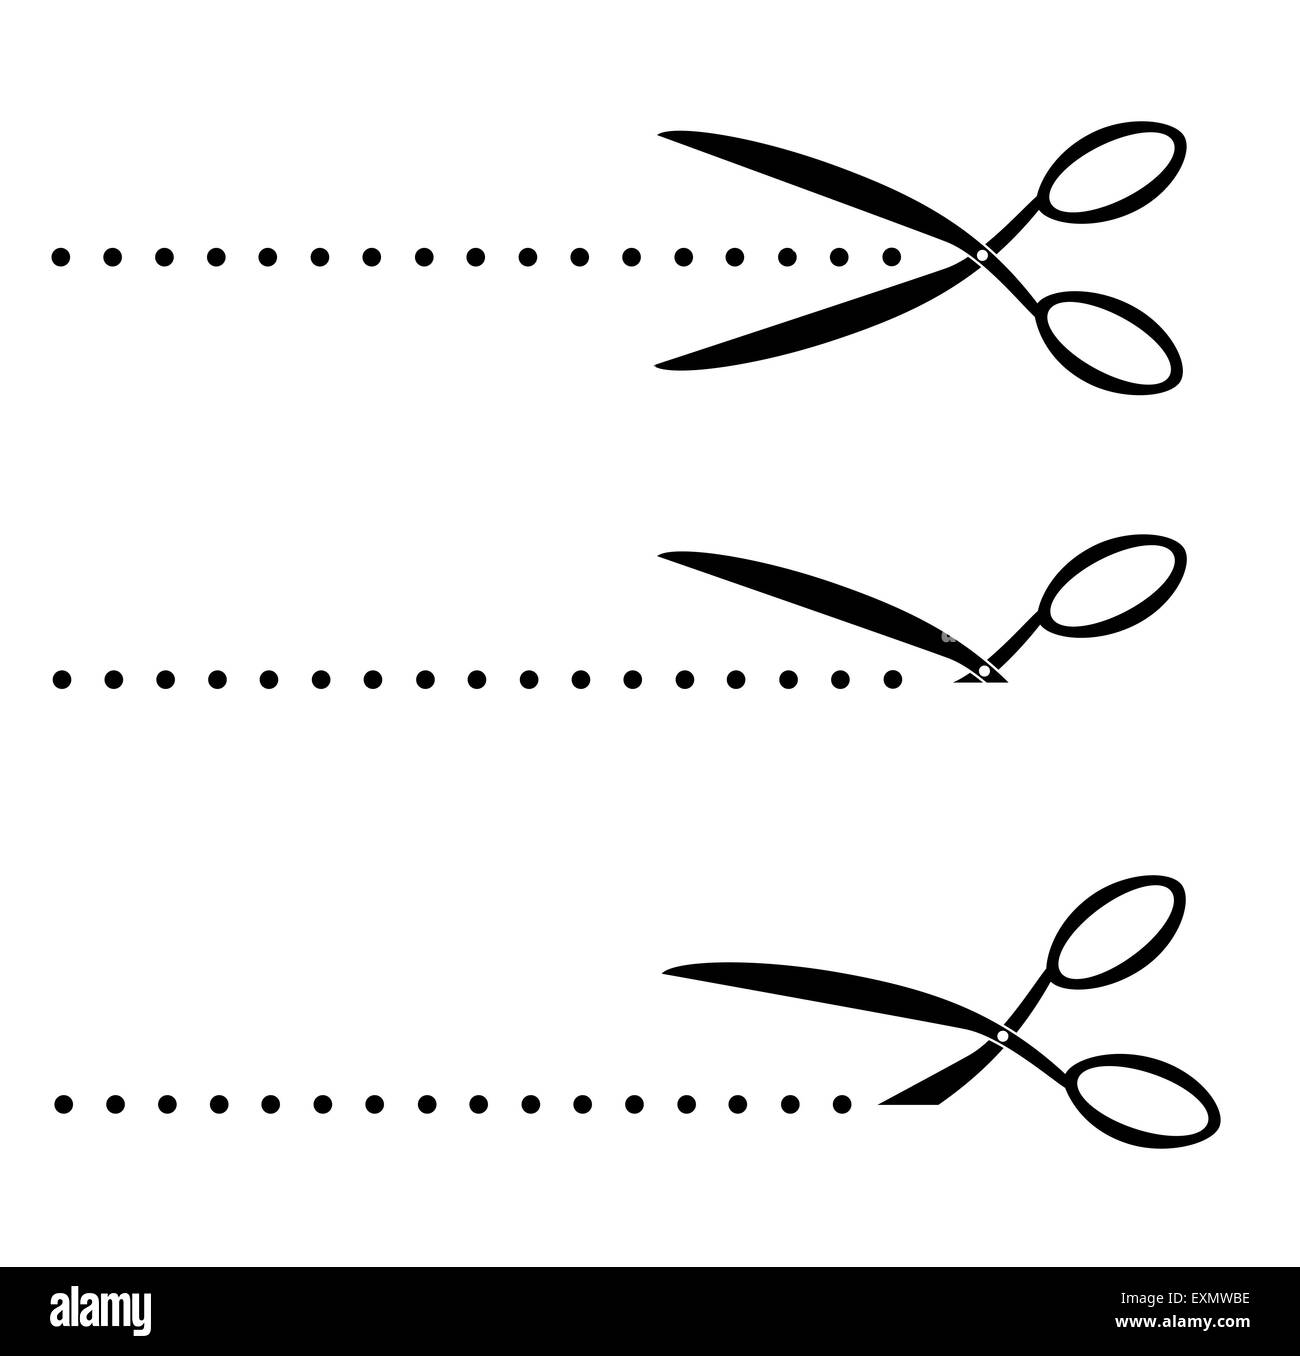 Black scissors icon set with cut line Stock Photo